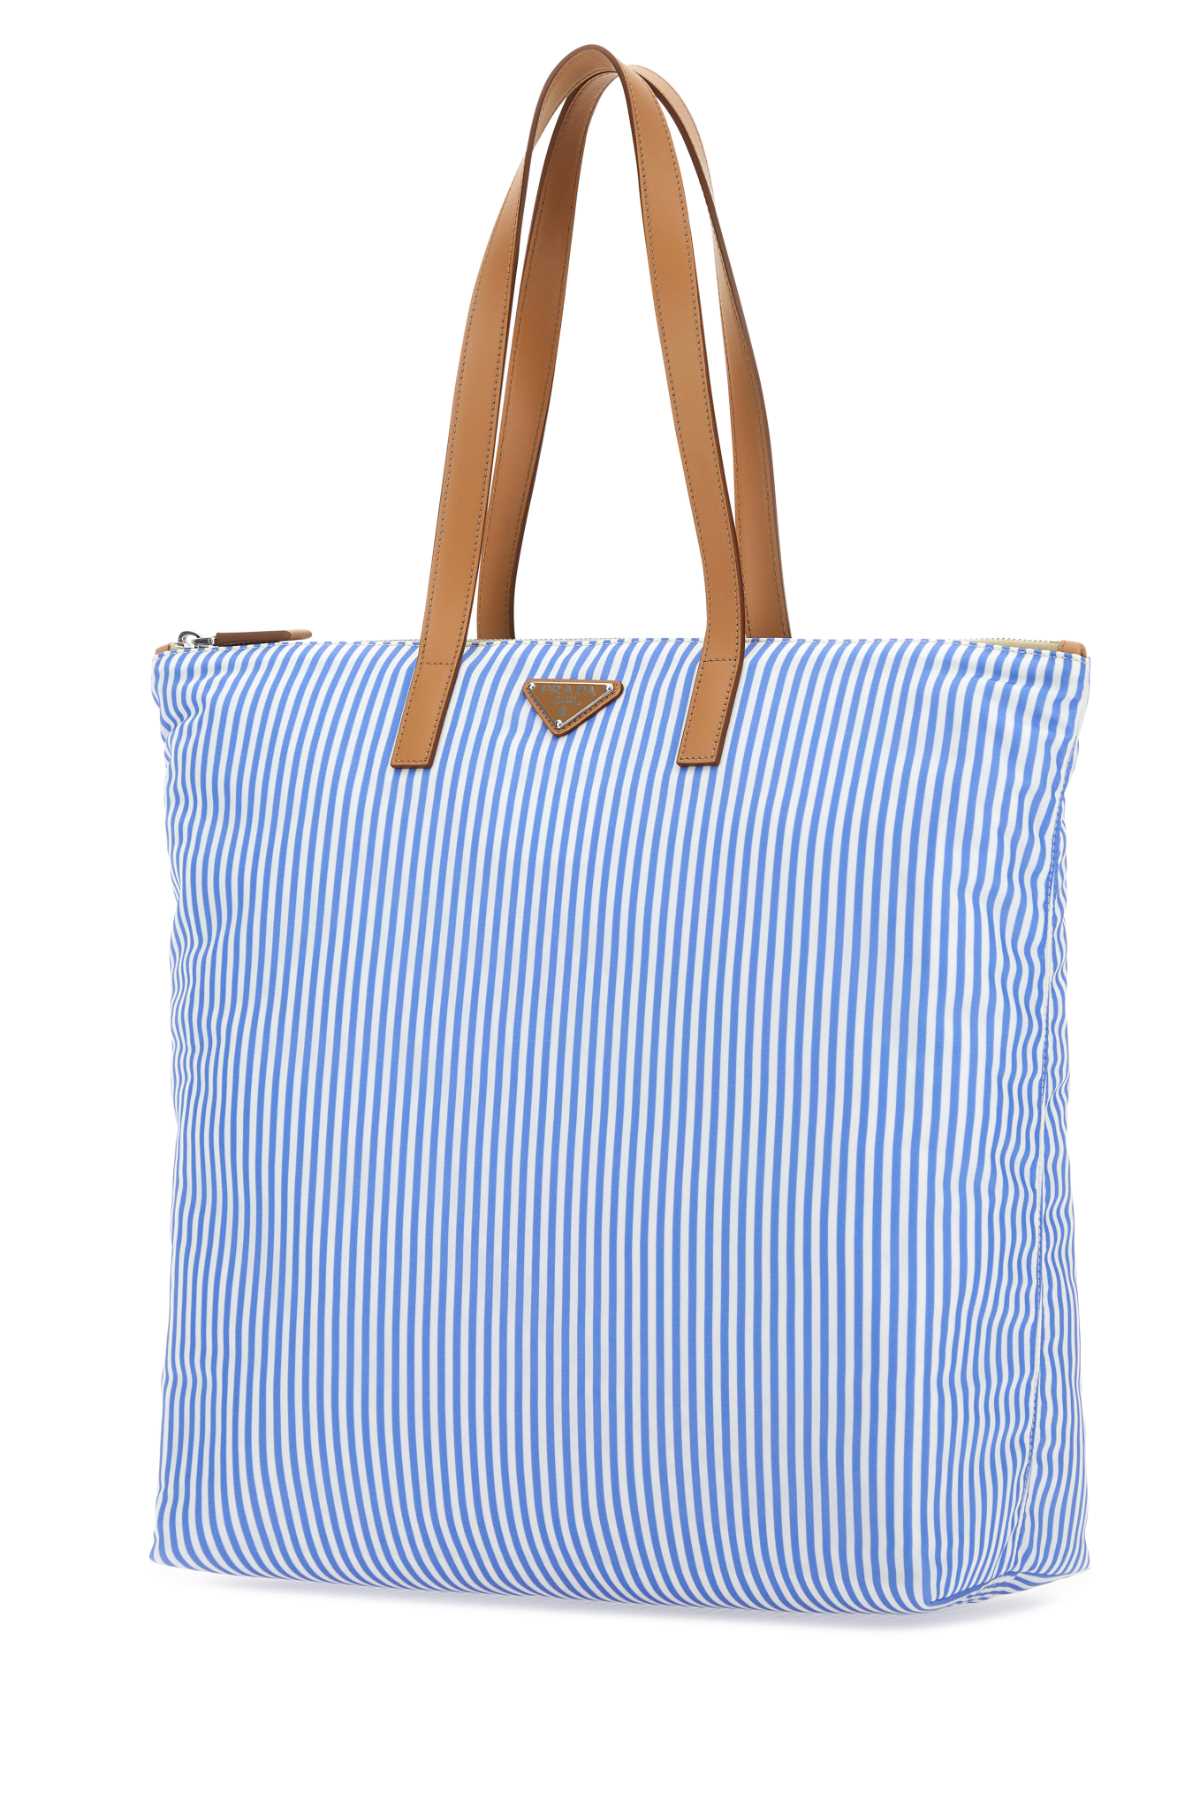 Prada Printed Re-nylon Shopping Bag In Celestenatura